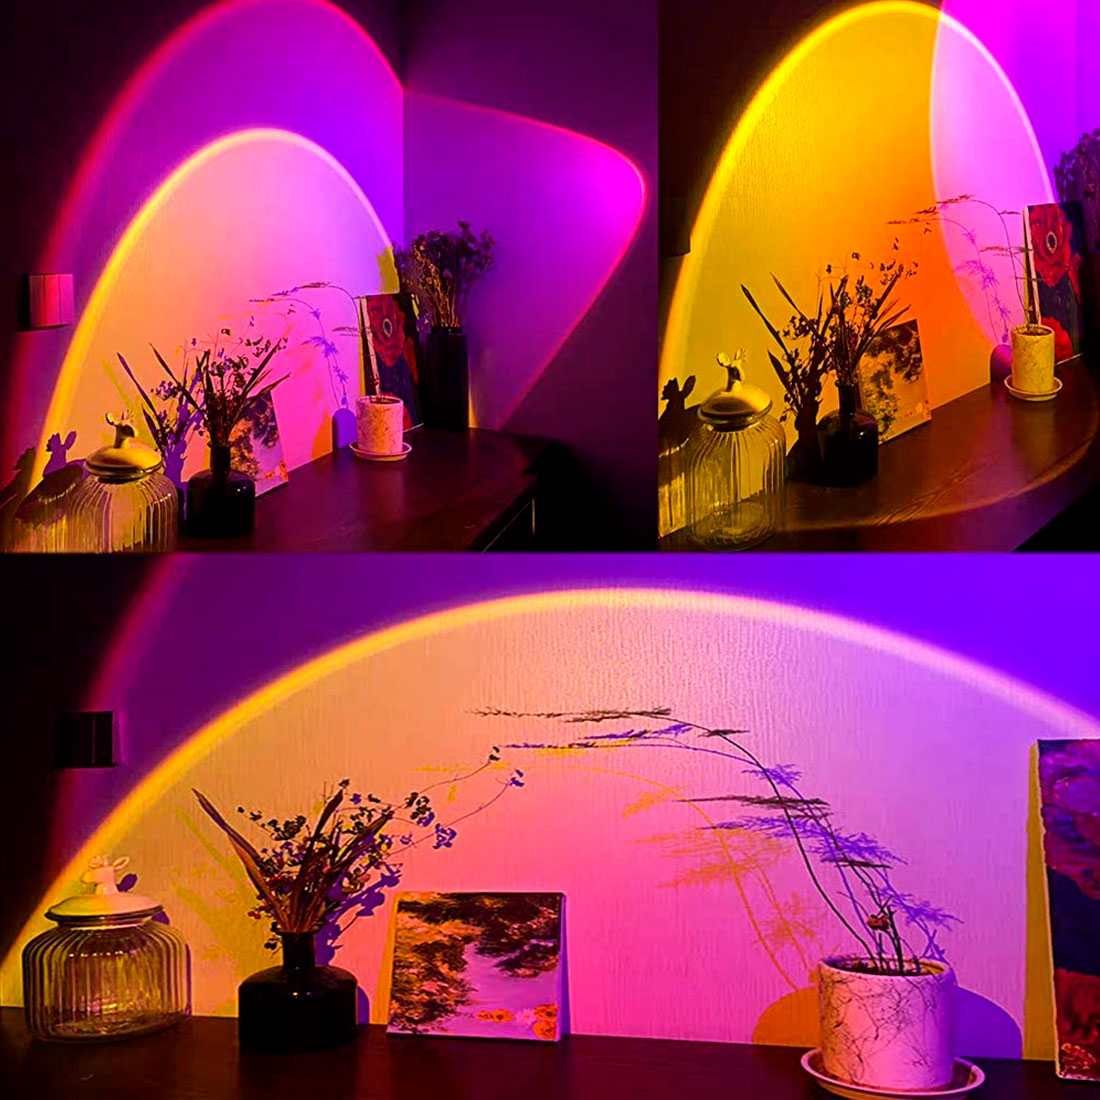 USB-Sunset-Projection-Lamp-Aesthetic-Table-Lamp-Anti-glare-LED-Night-Light-Romantic-Visual-Experienc-1822954-7